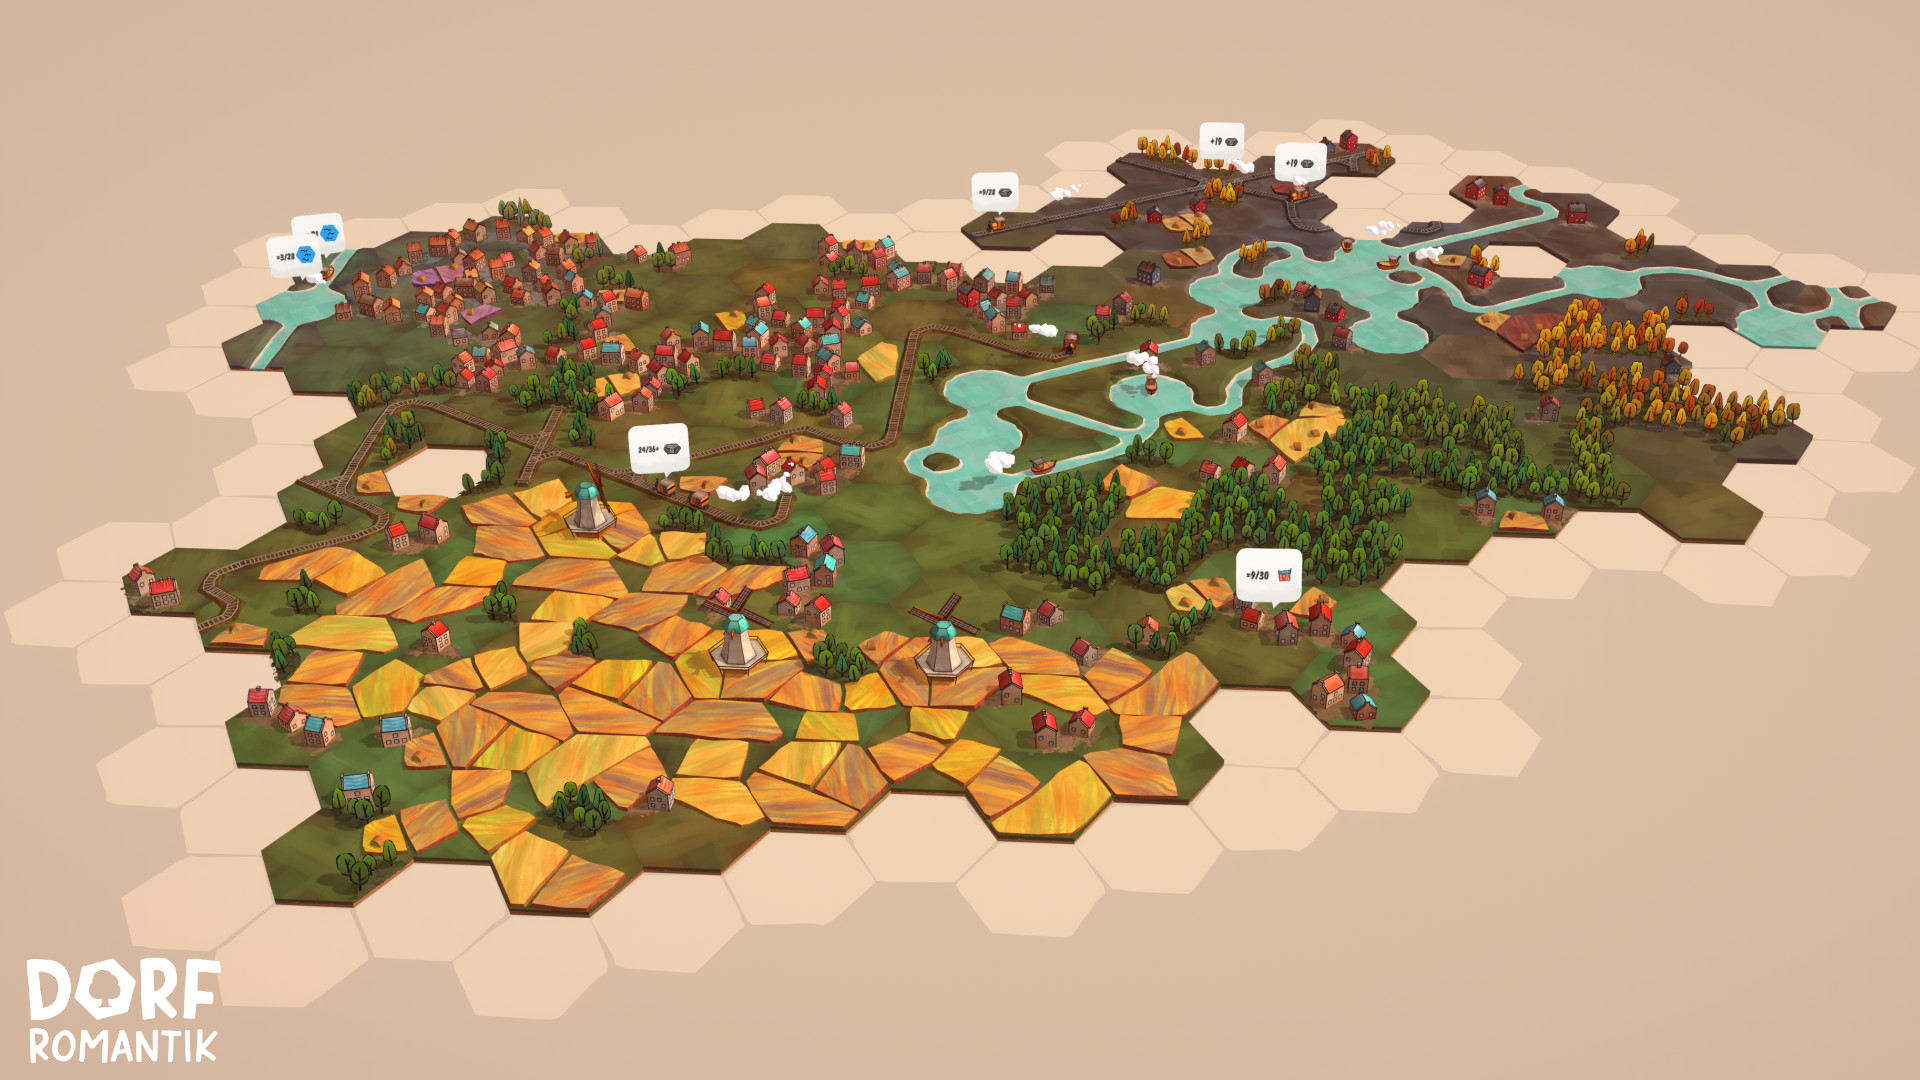 A countryside scene made of hexagonal tiles from the game Dorfromantik.